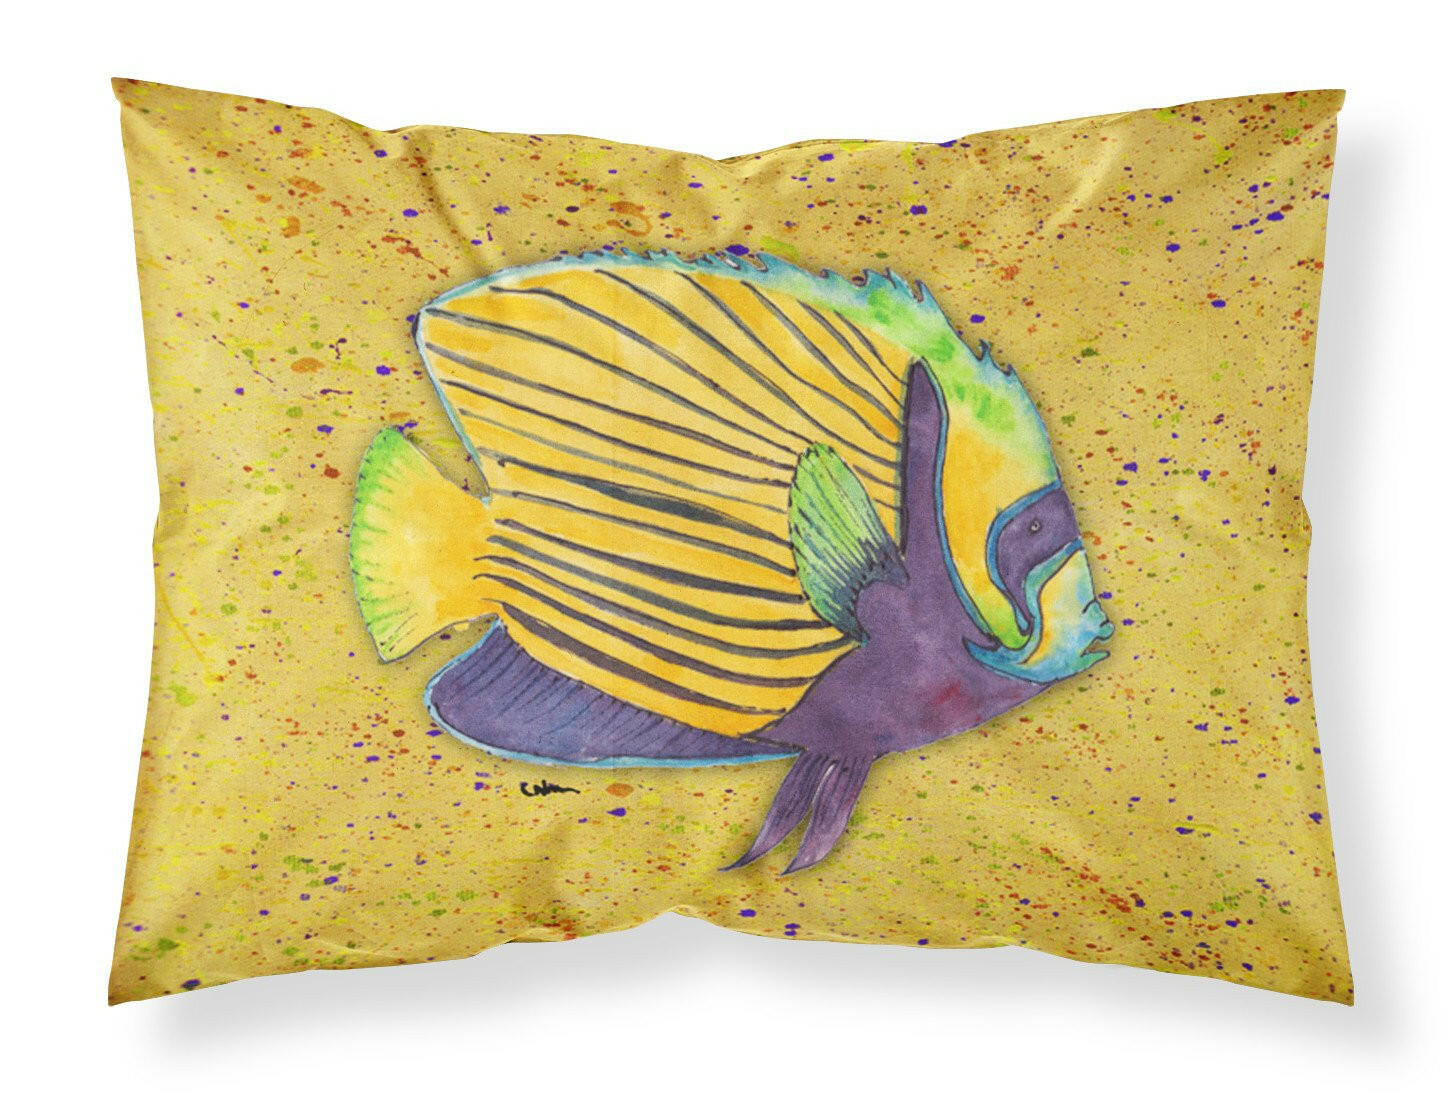 Tropical Fish on Mustard Moisture wicking Fabric standard pillowcase by Caroline's Treasures